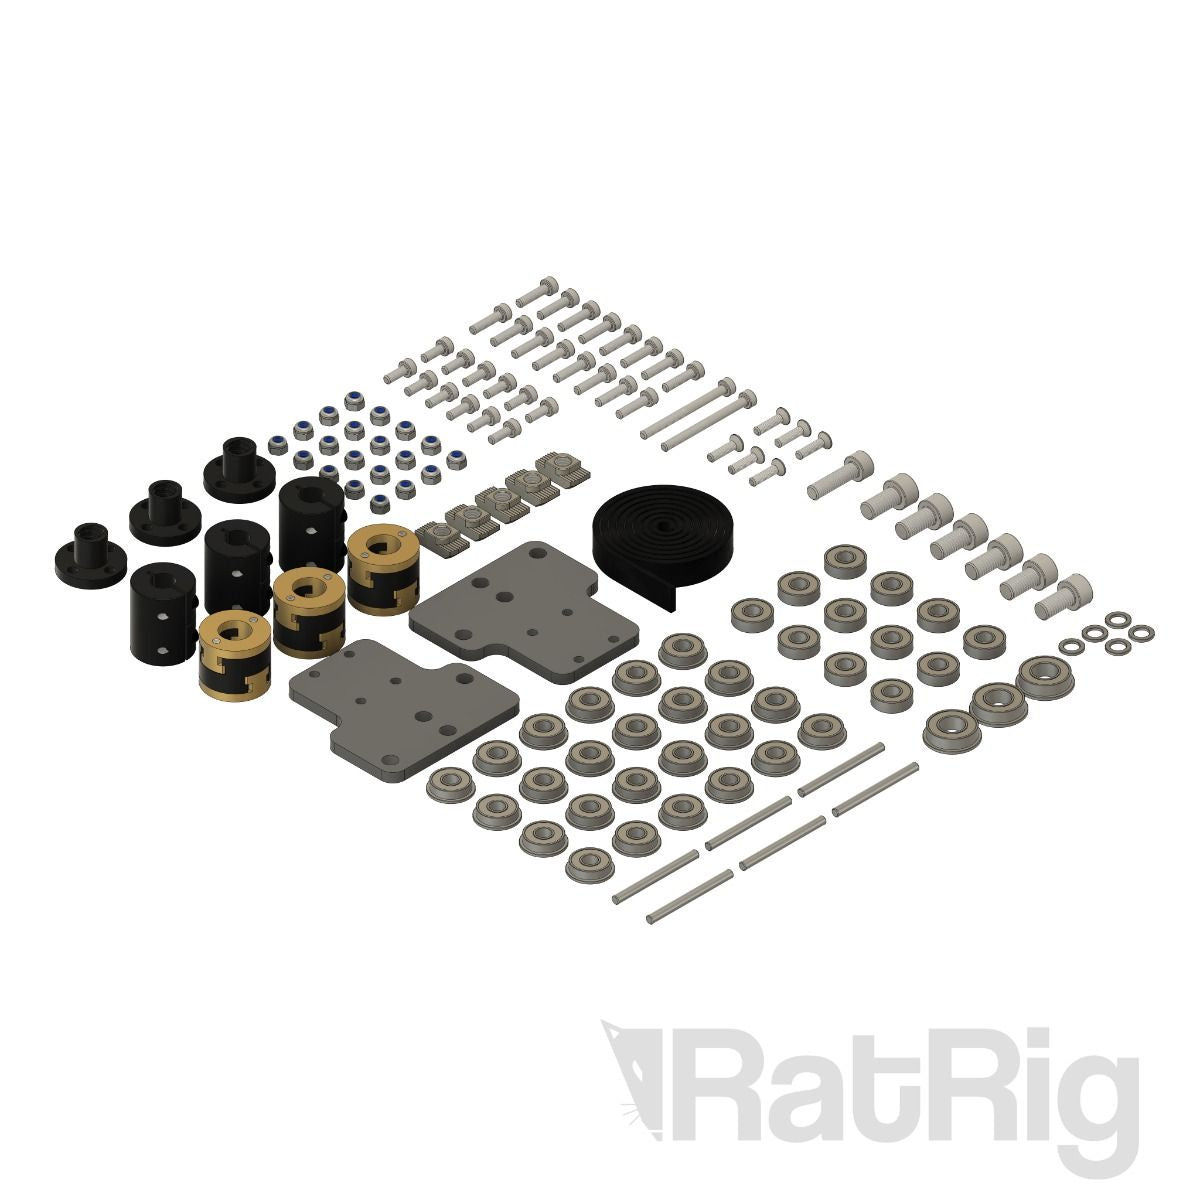 Rat Rig  V-Core 3 Upgrade Kit (v3.0 to v3.1)